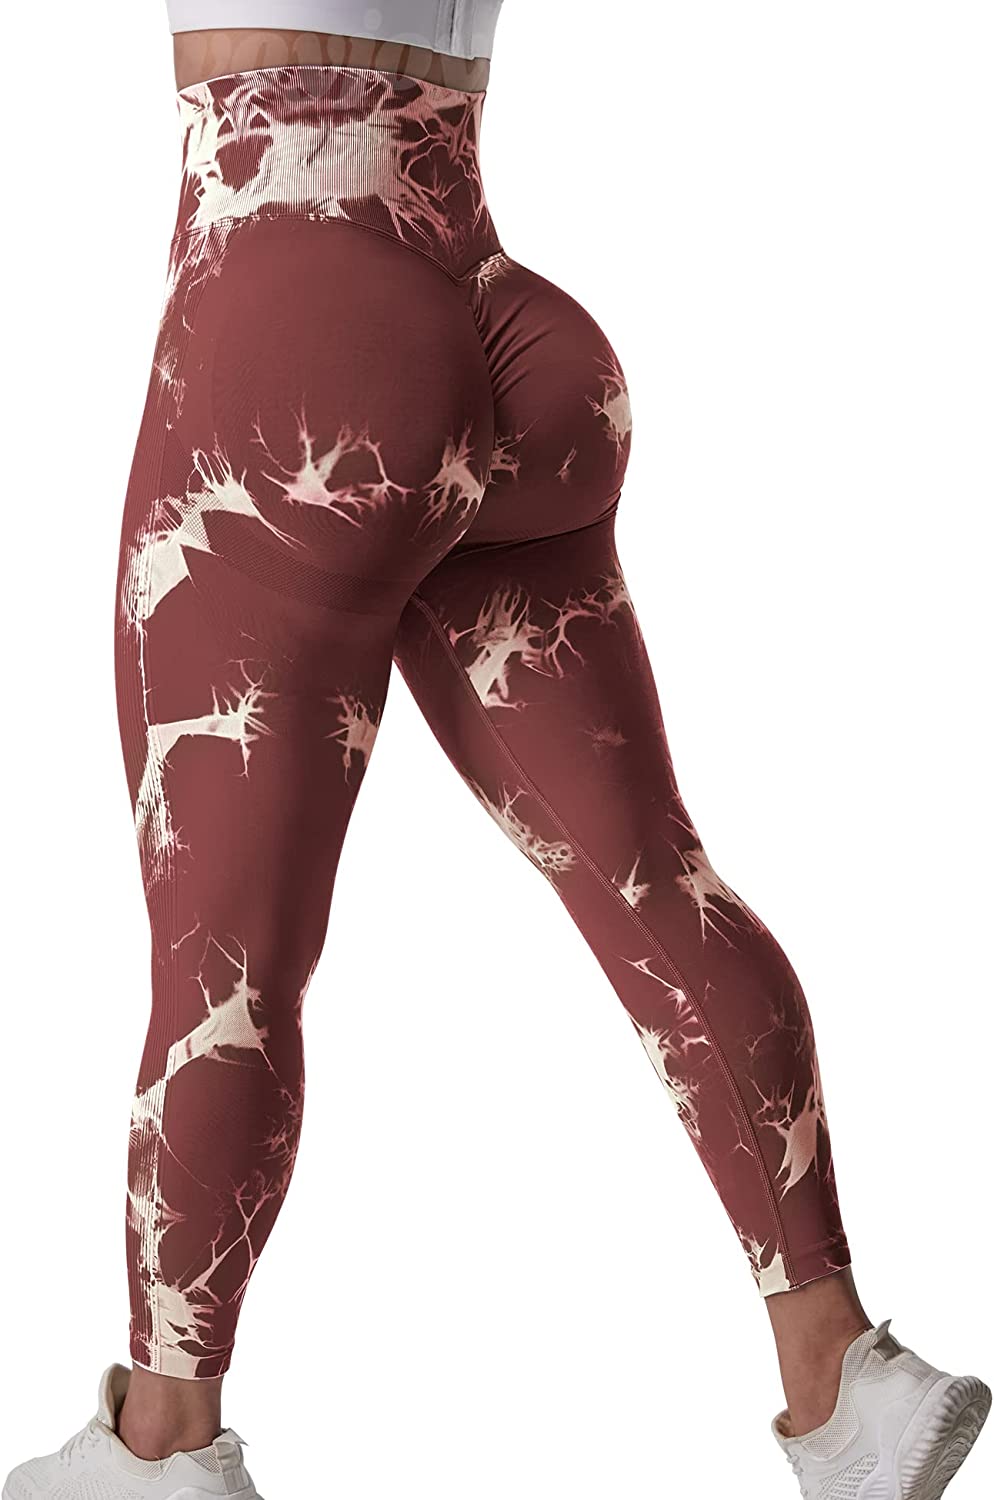 Buy VOYJOY Tie Dye Seamless Leggings for Women High Waist Yoga Pants, Scrunch  Butt Lifting Elastic Tights online